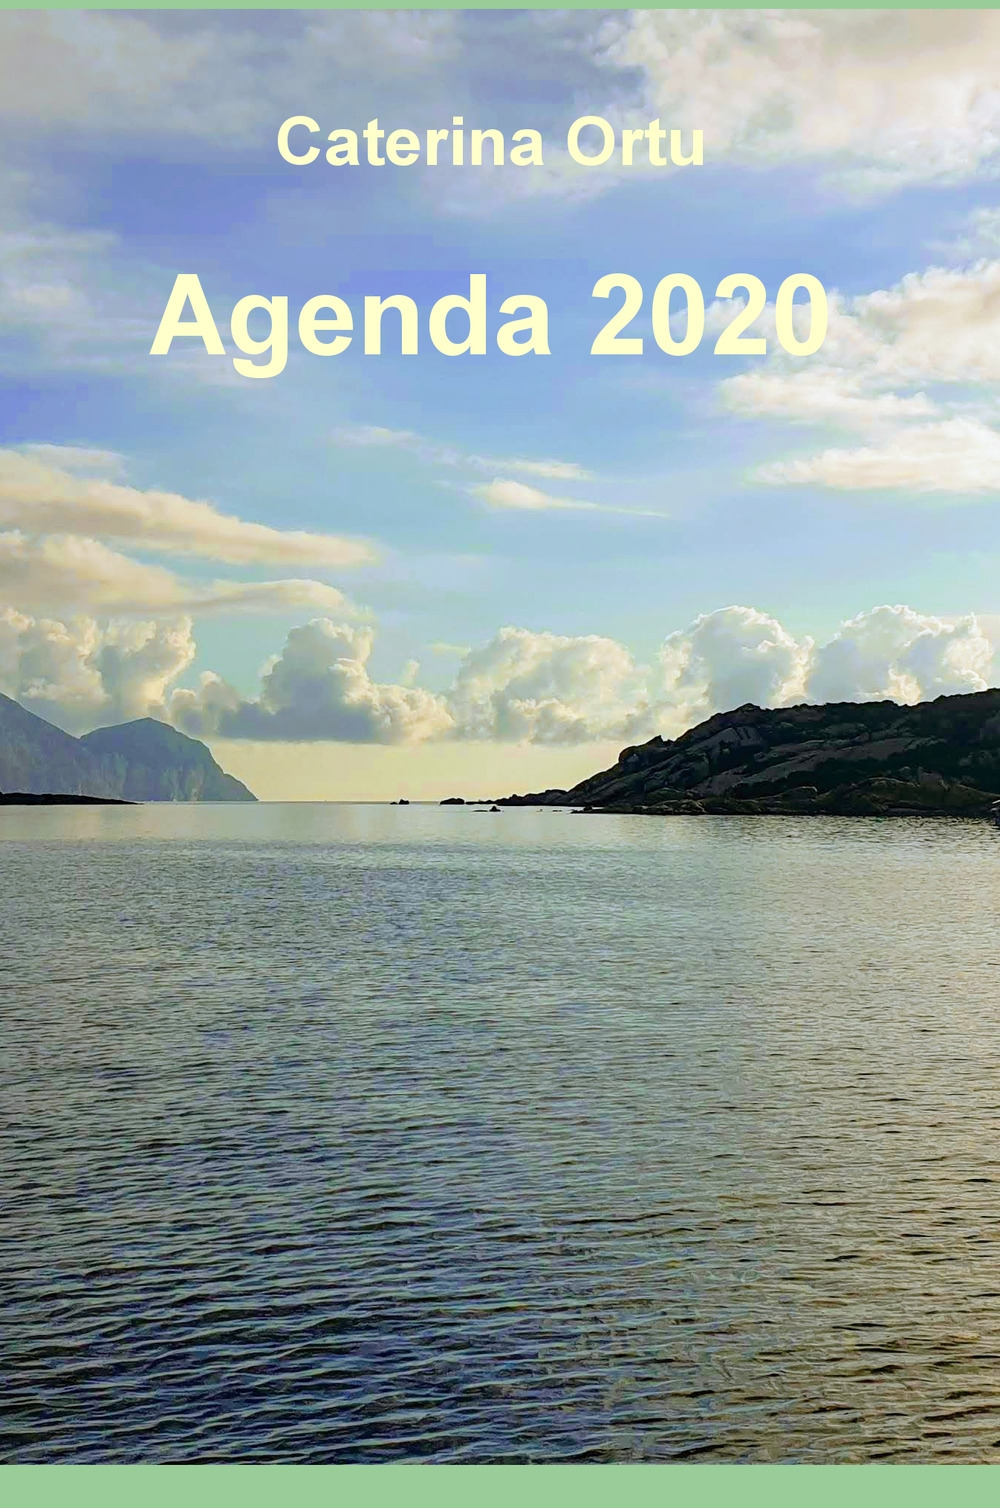 Image of Agenda 2020